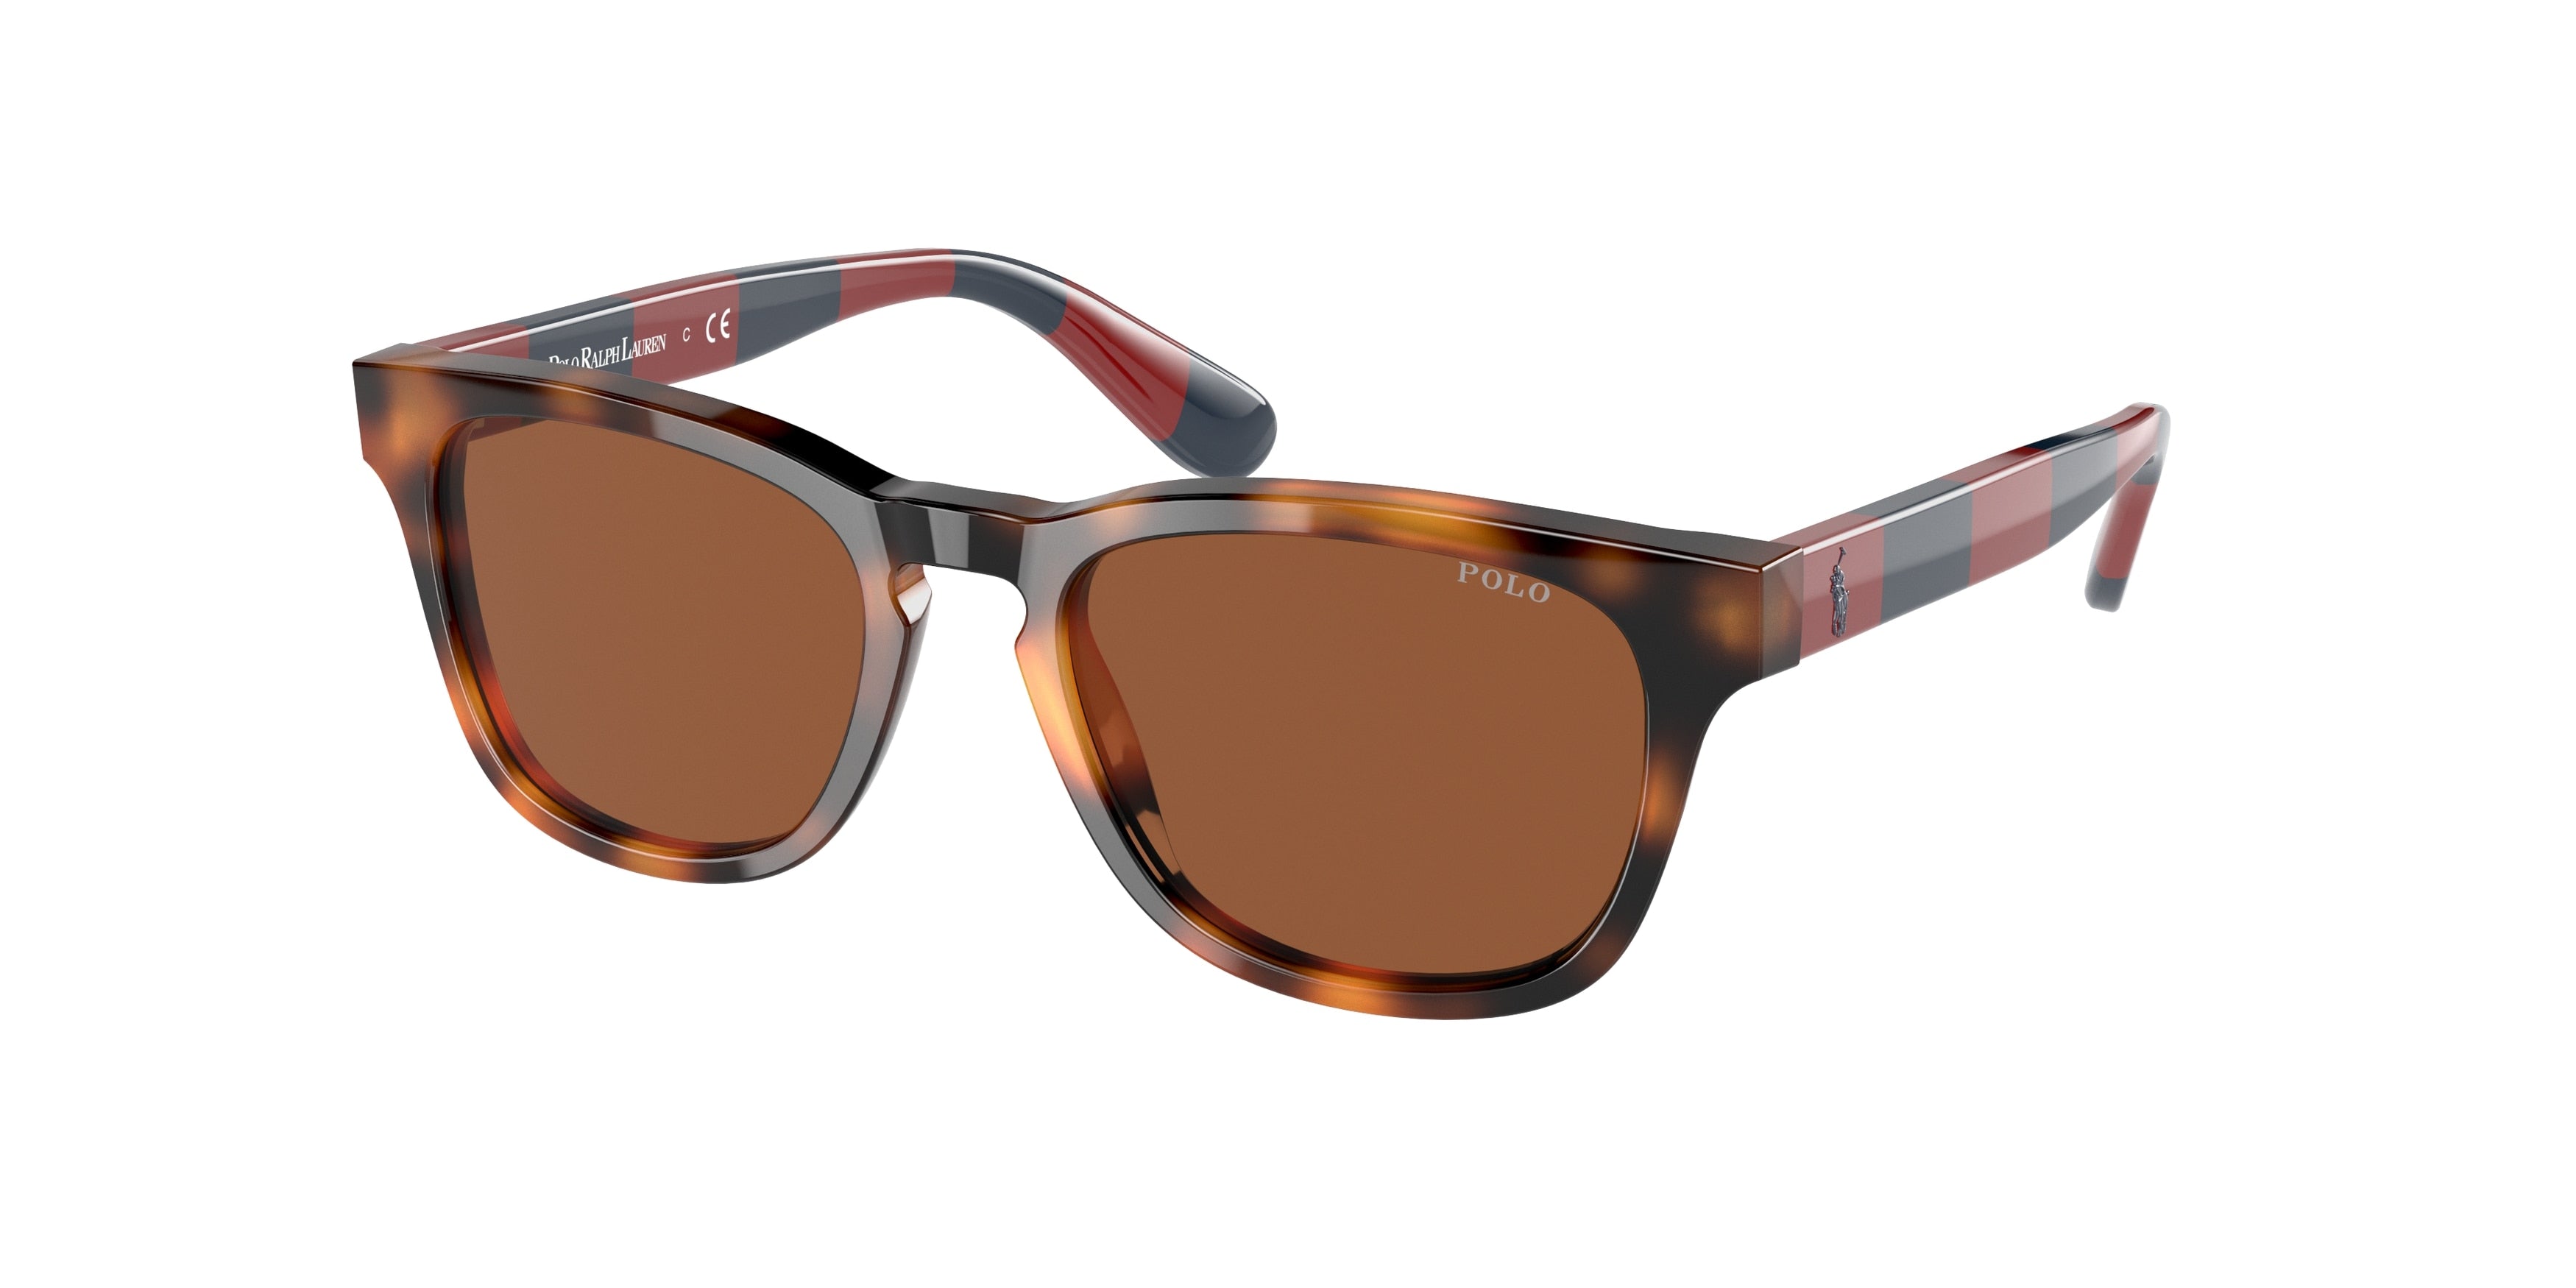 Jimmy Choo - Cami - Dark Havana Square-Frame Sunglasses with Green JC  Emblem - Jimmy Choo Eyewear - Avvenice